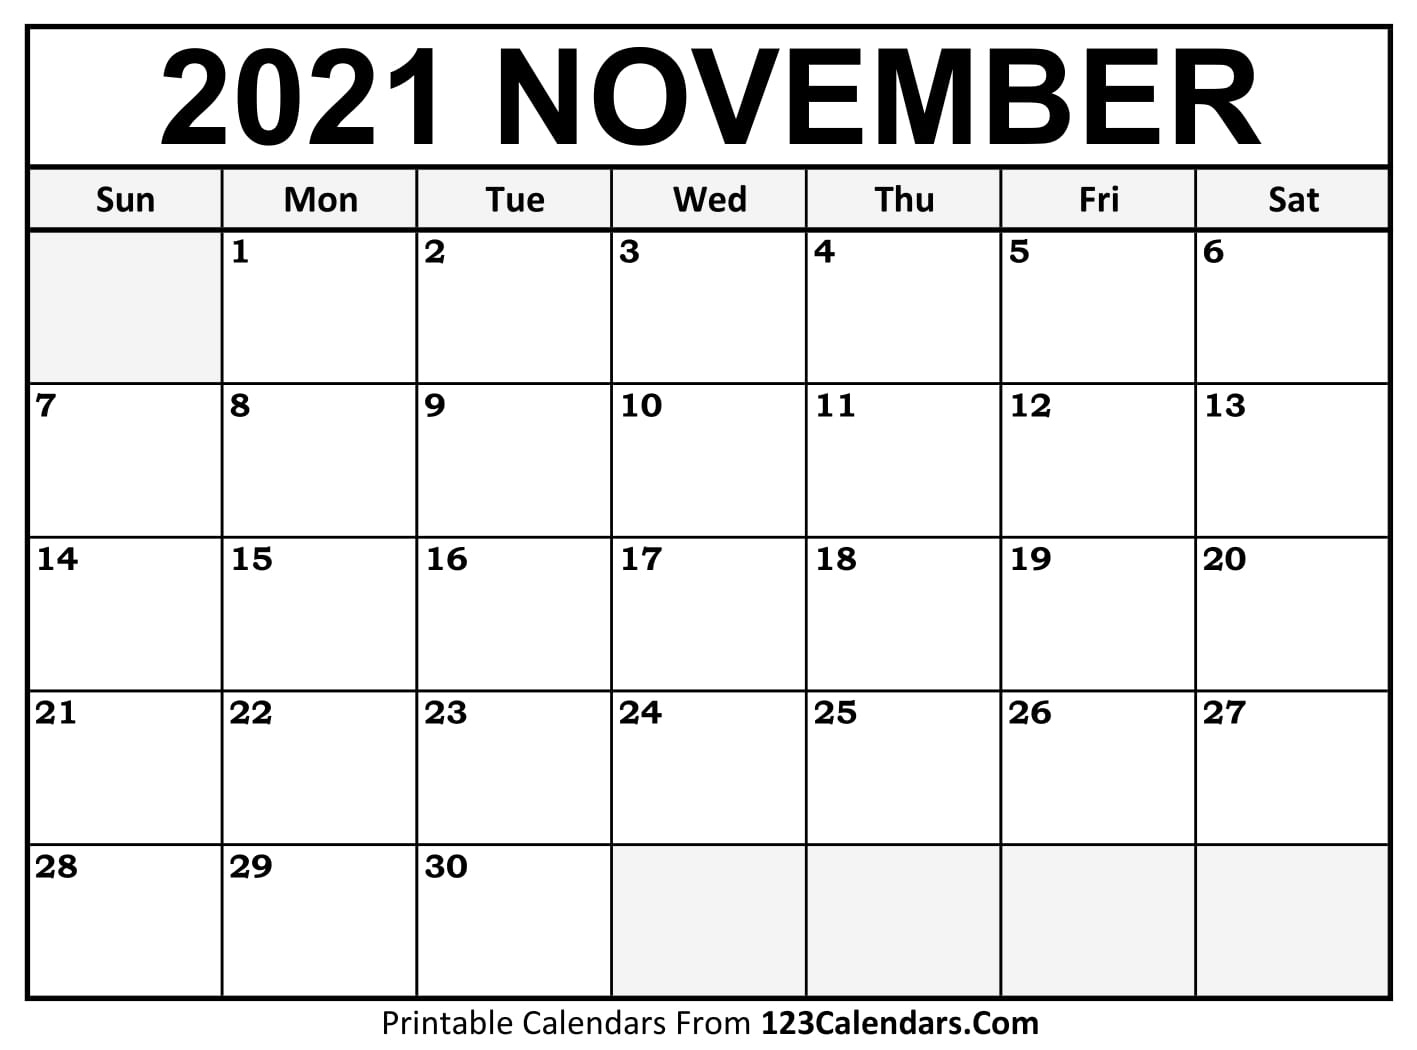 Printable November 2021 Calendar Templates - 123Calendars Calendar Of November 2021